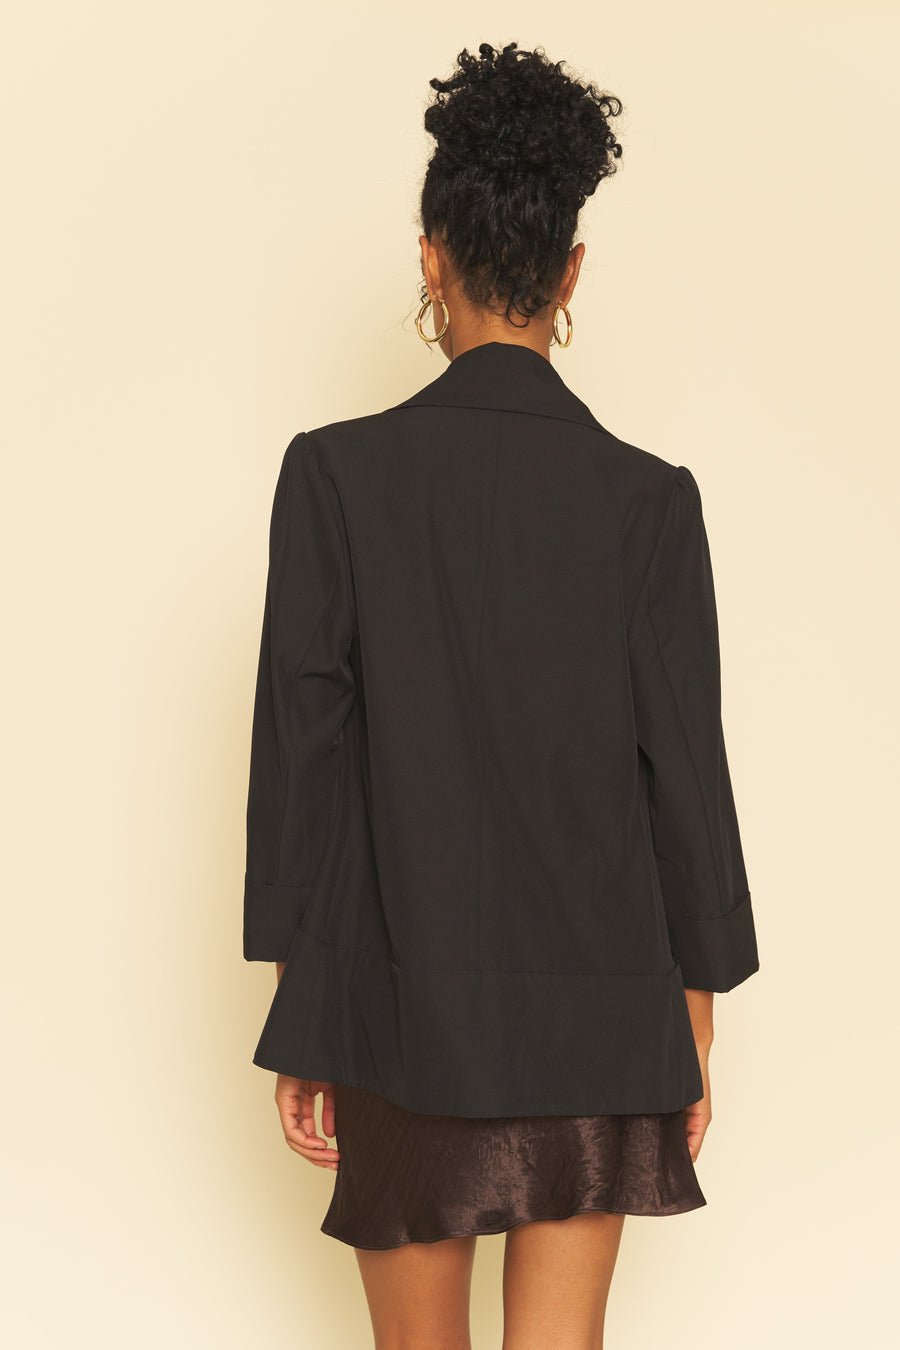 No Srcipt image - Images of 7 of 8 Melanie woven jacket, shawl jacket, open front, black color